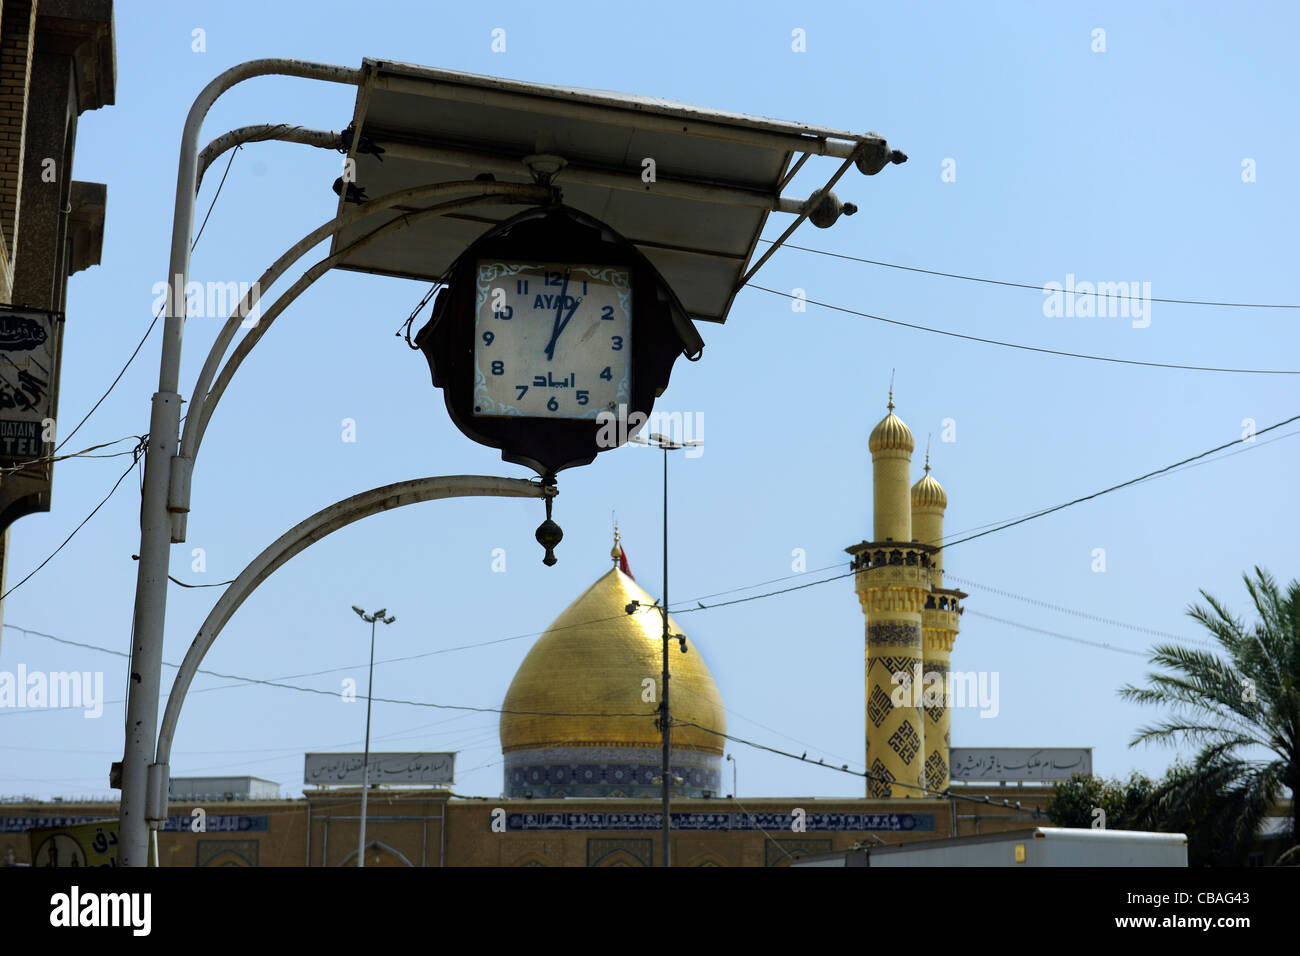 Iraq, Kerbala. Imam Husein (Husayn) shrine with clock in the foreground Stock Photo